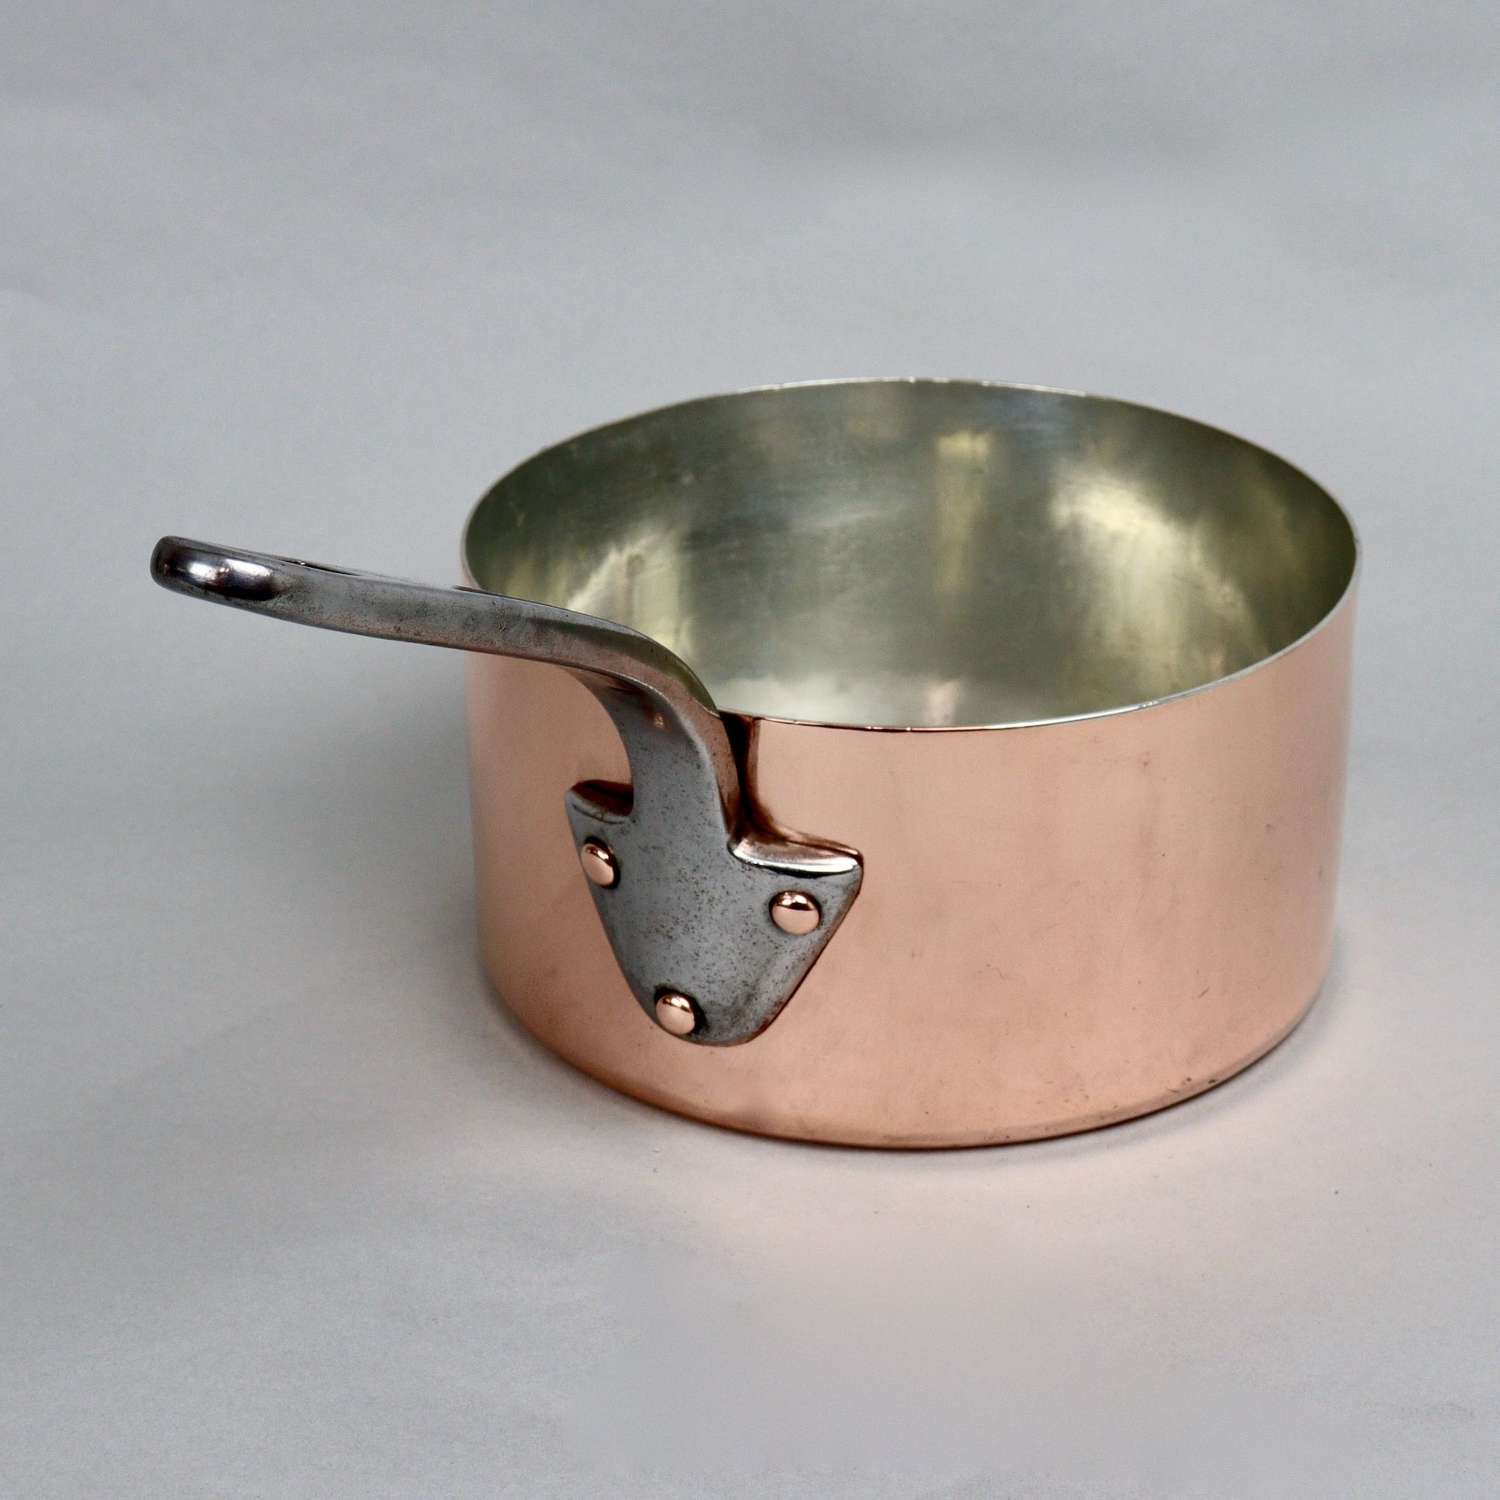 French Copper Saucepan